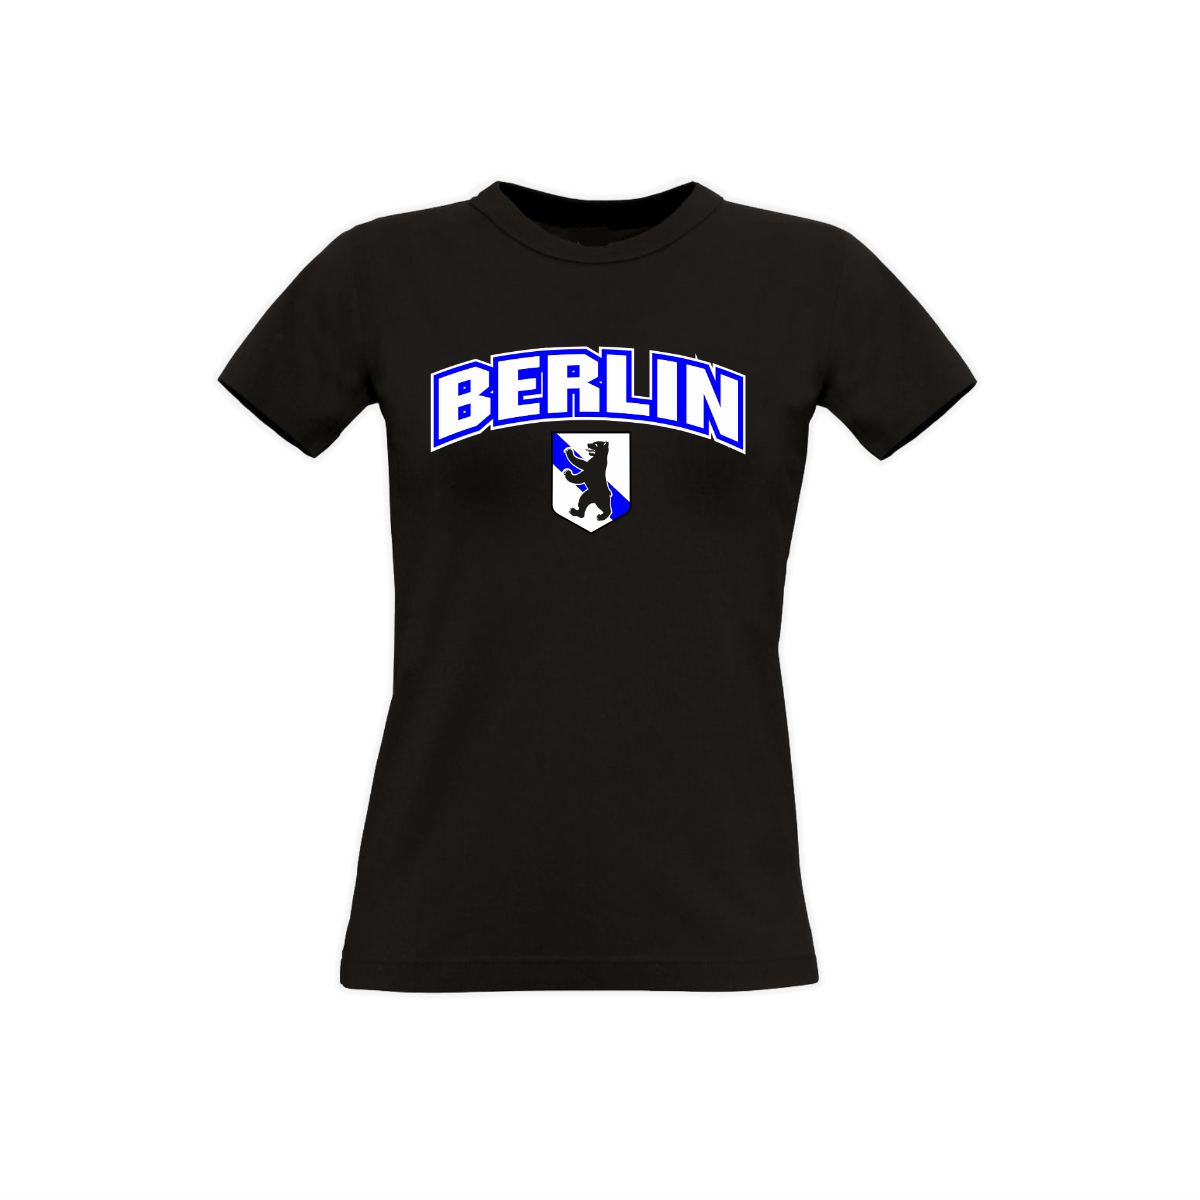 Girly-Shirt "BERLIN" schwarz